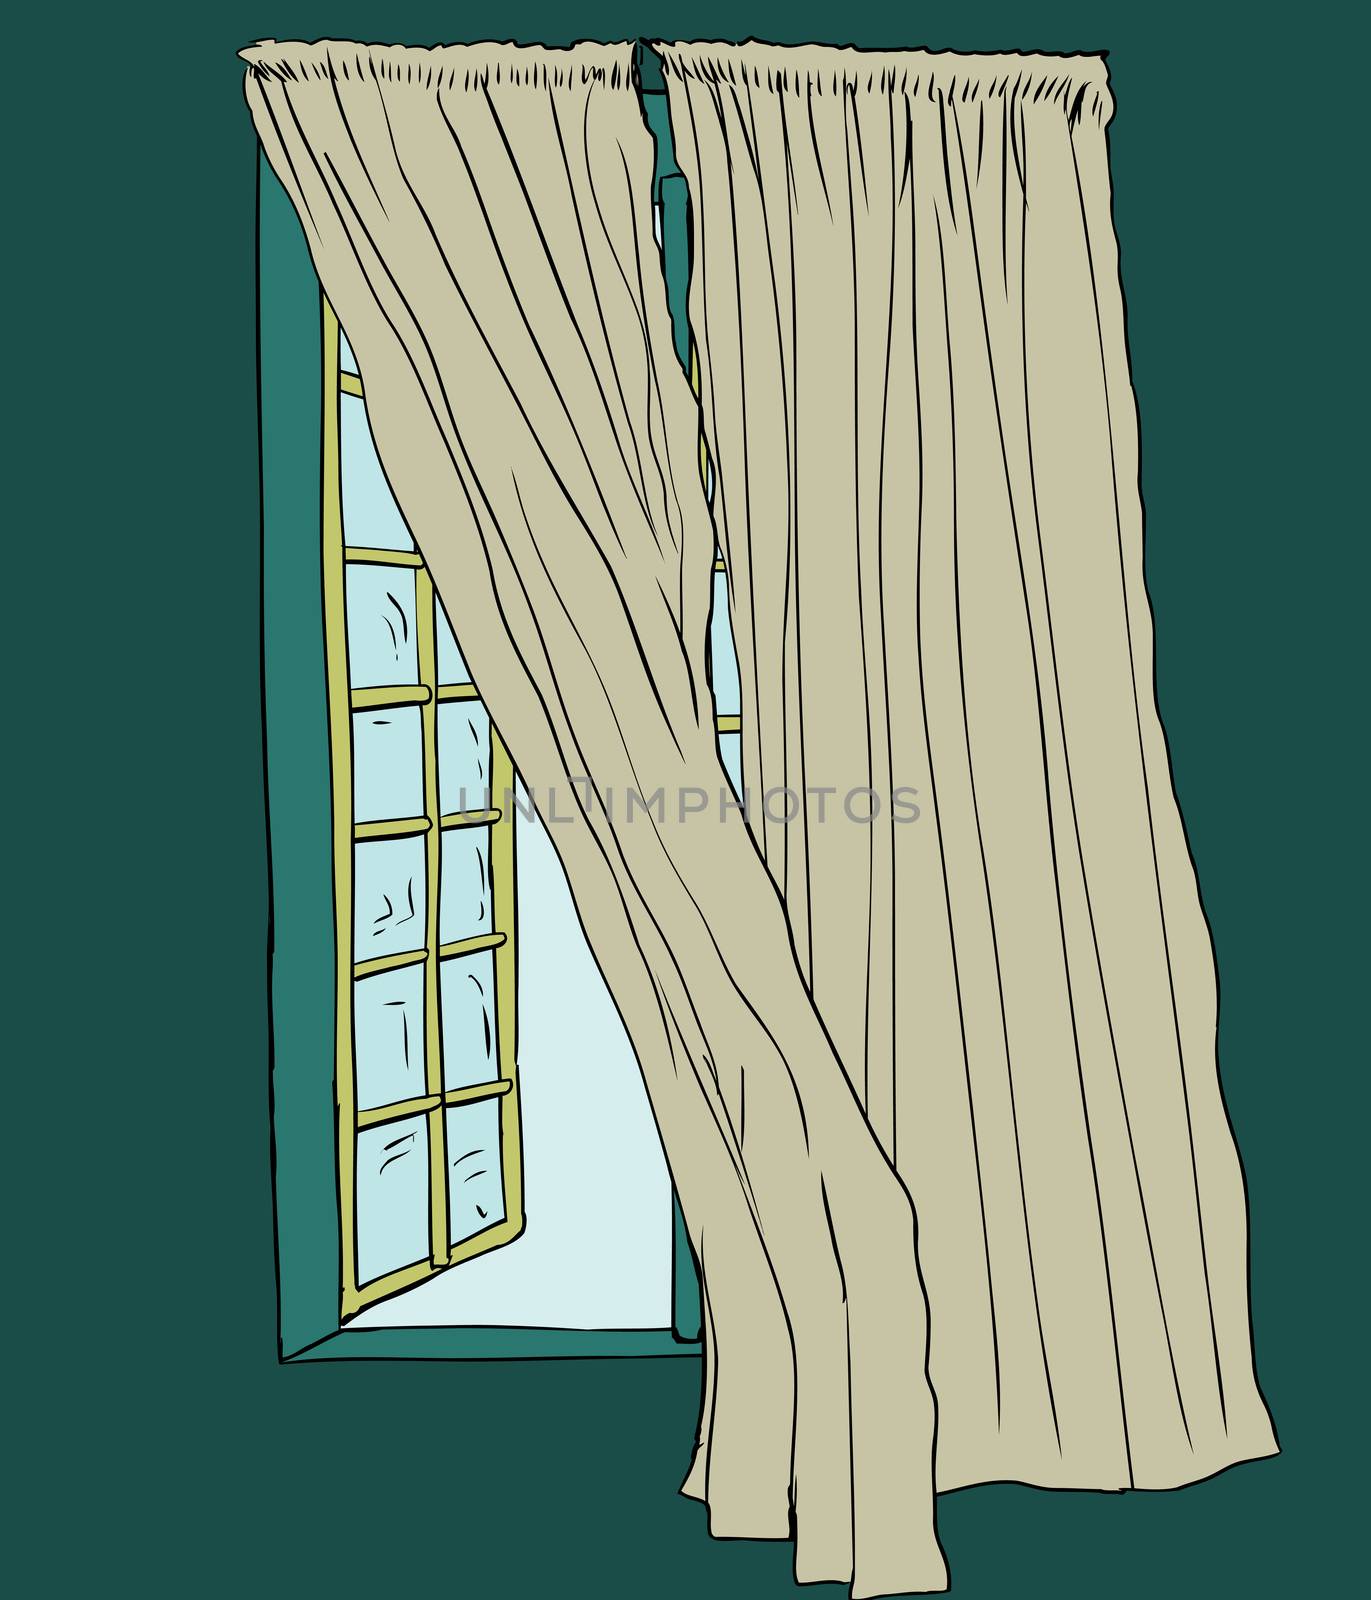 Hand drawn drapes blowing in wind beside open casement window indoors